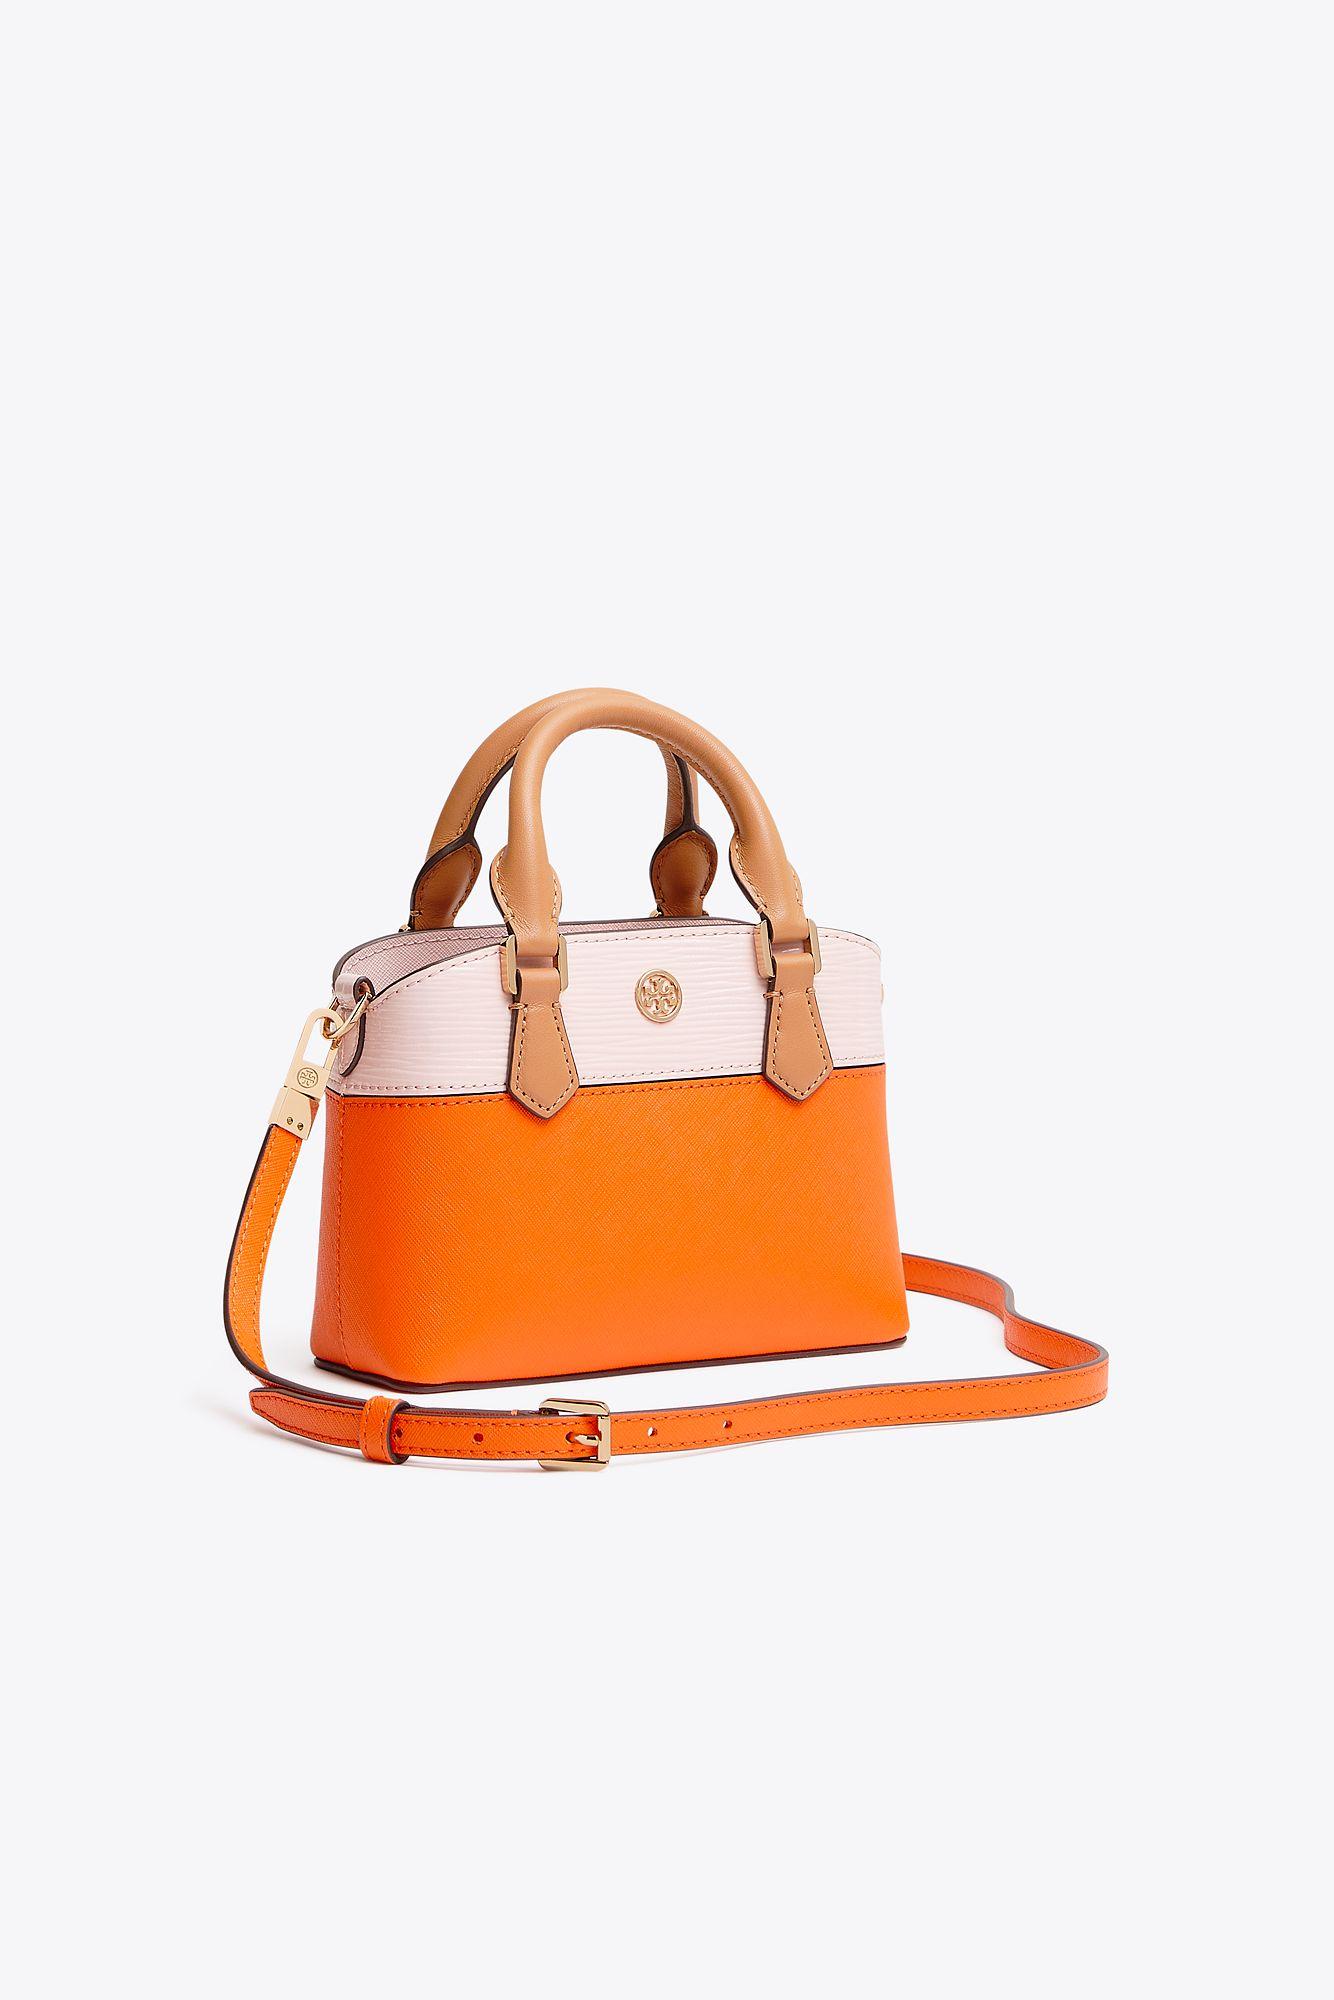 Tory Burch Robinson Color-block Top-handle Mini Bag in Orange | Lyst